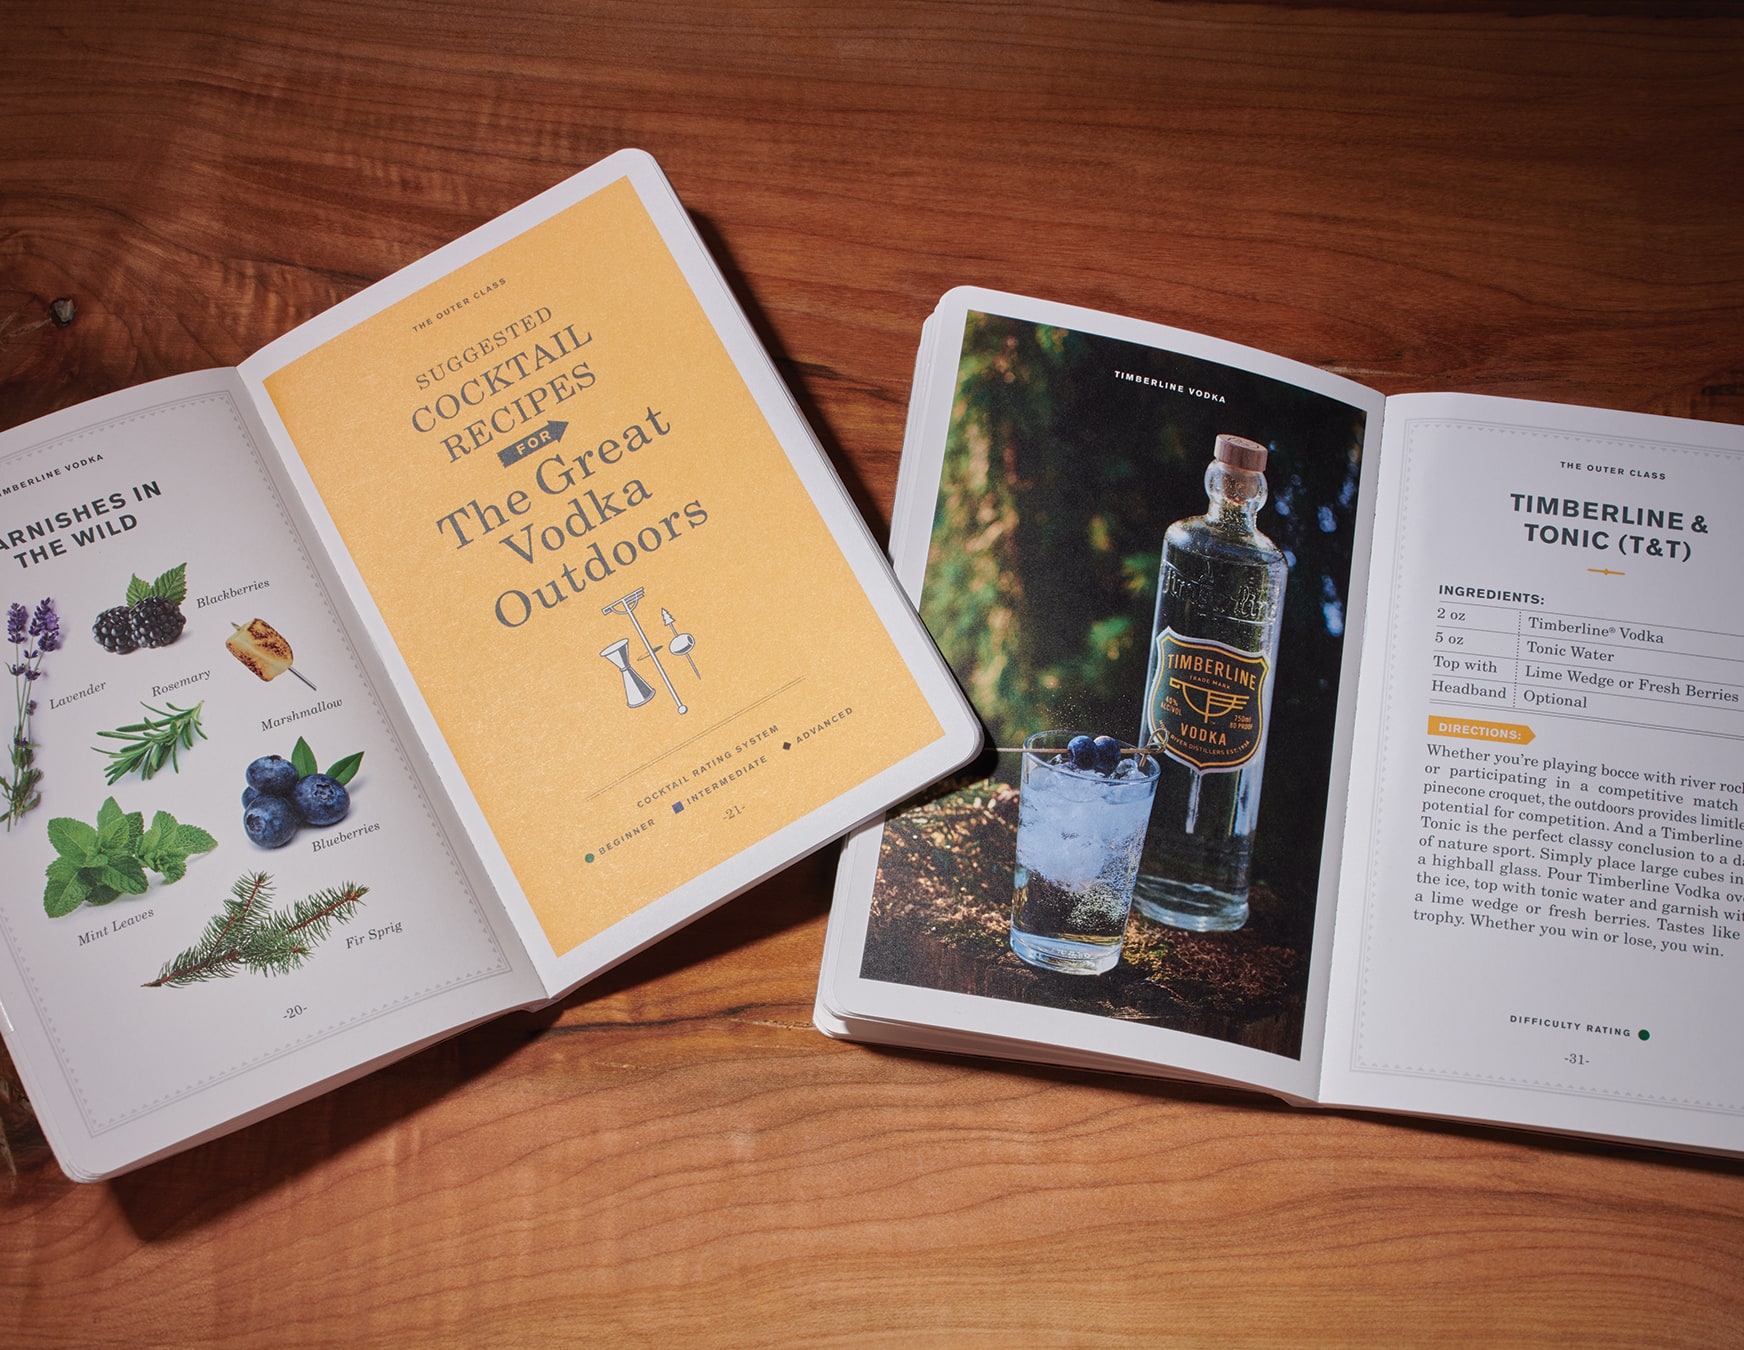 Timberline Vodka promotion book spread